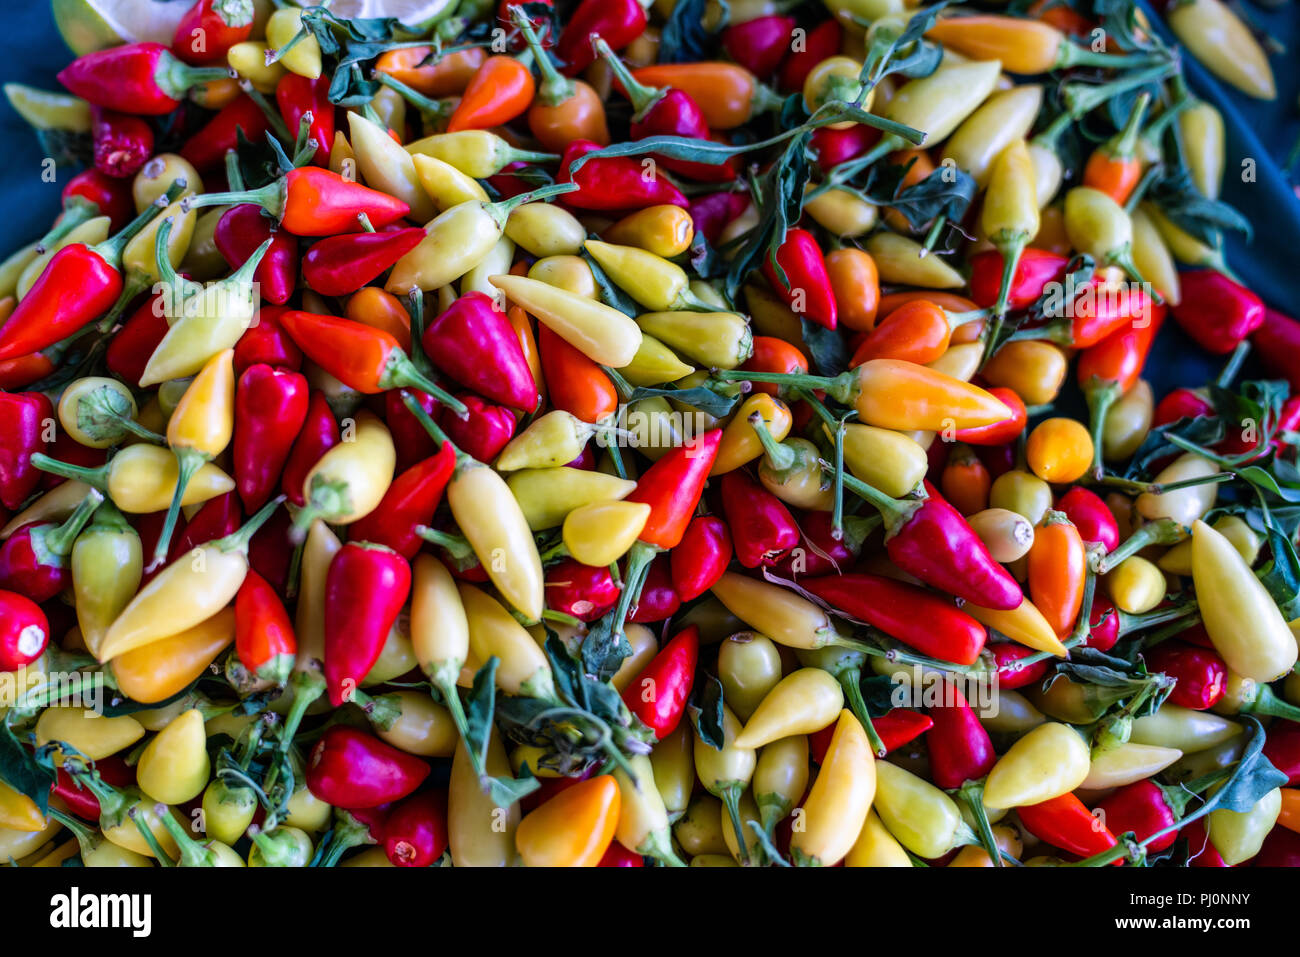 Multicolored capsicum frutescens in a market Stock Photo